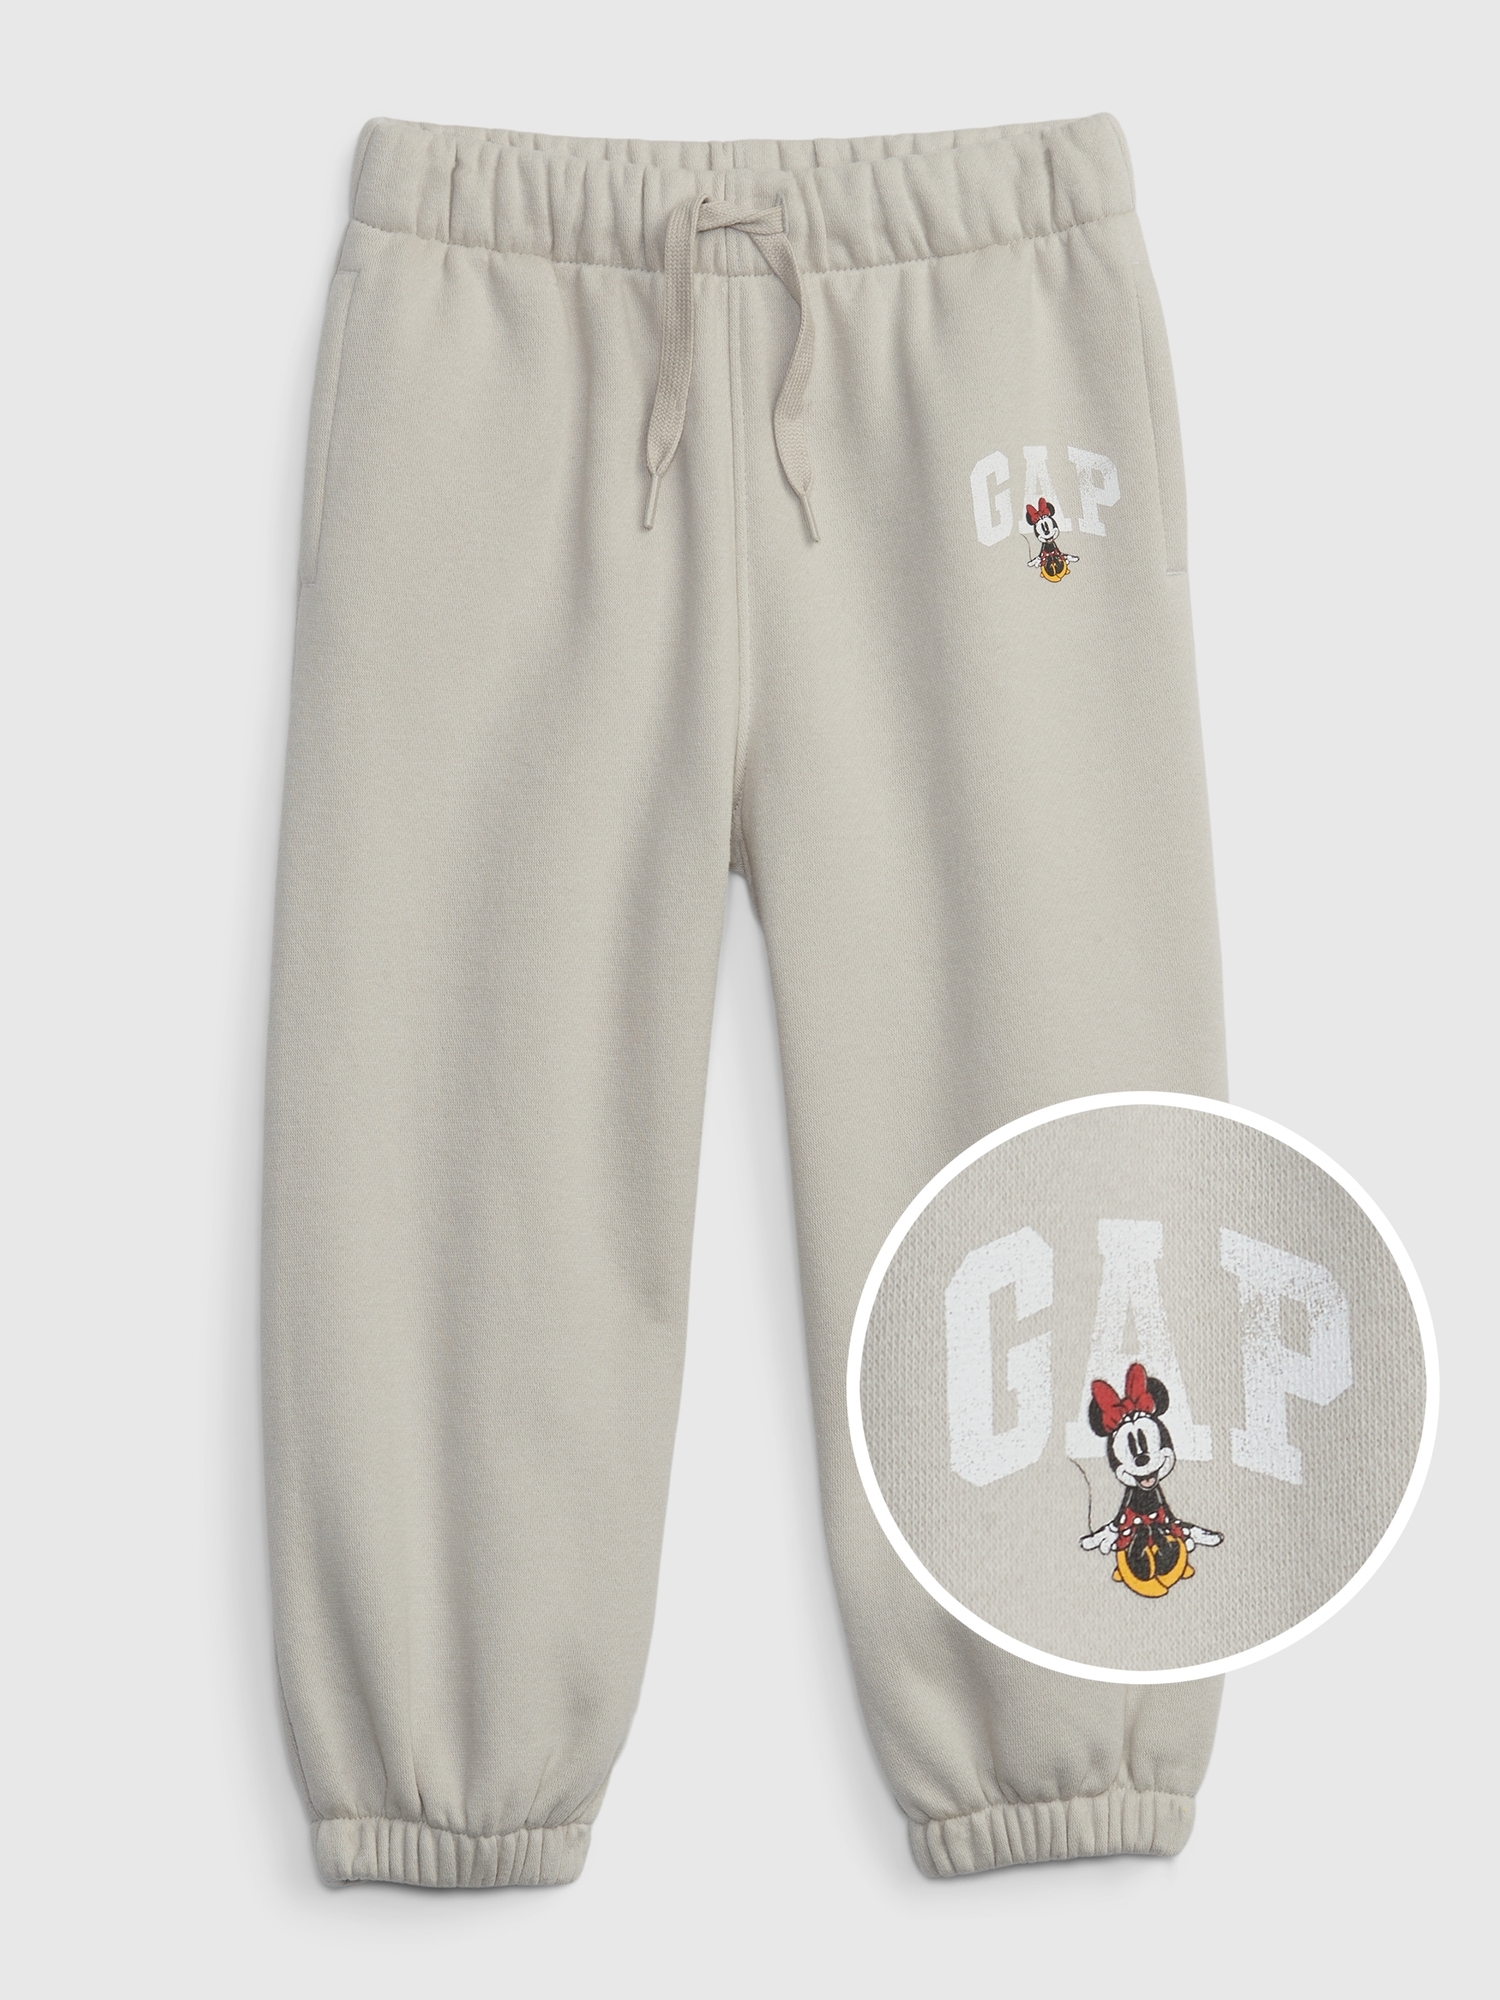 Disney Kids Minnie Mouse Track Pants - Cream - Size 4